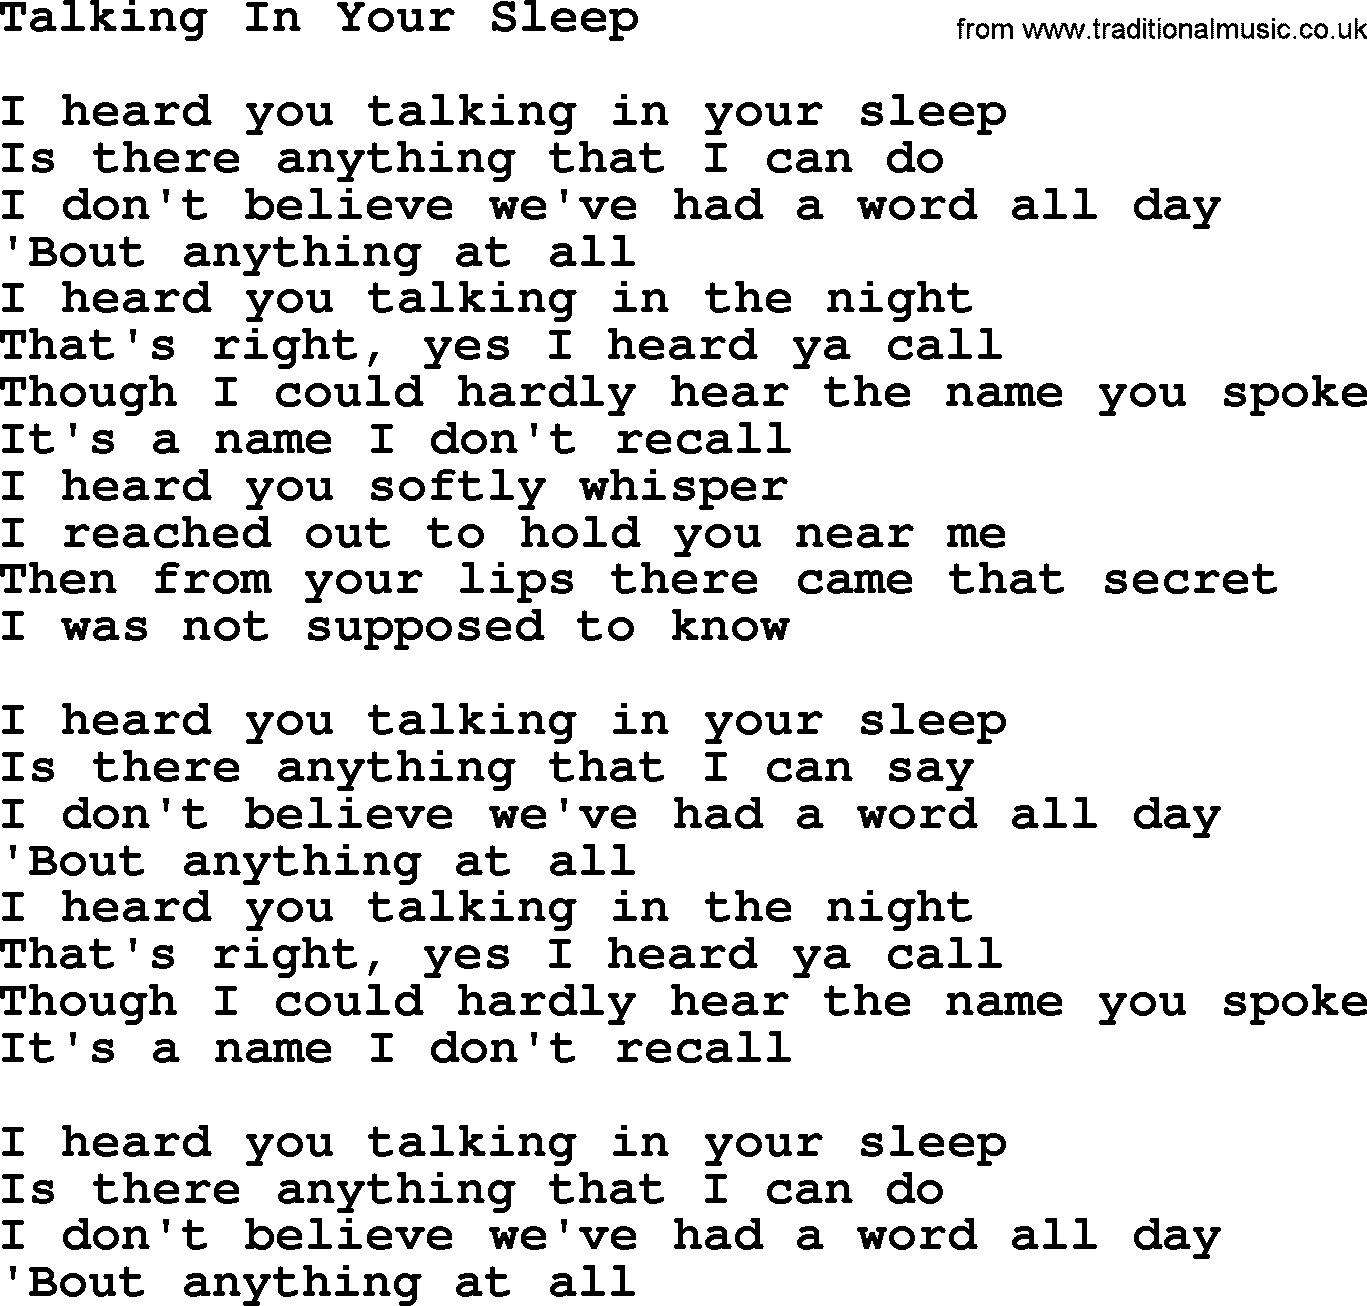 Gordon Lightfoot song Talking In Your Sleep, lyrics